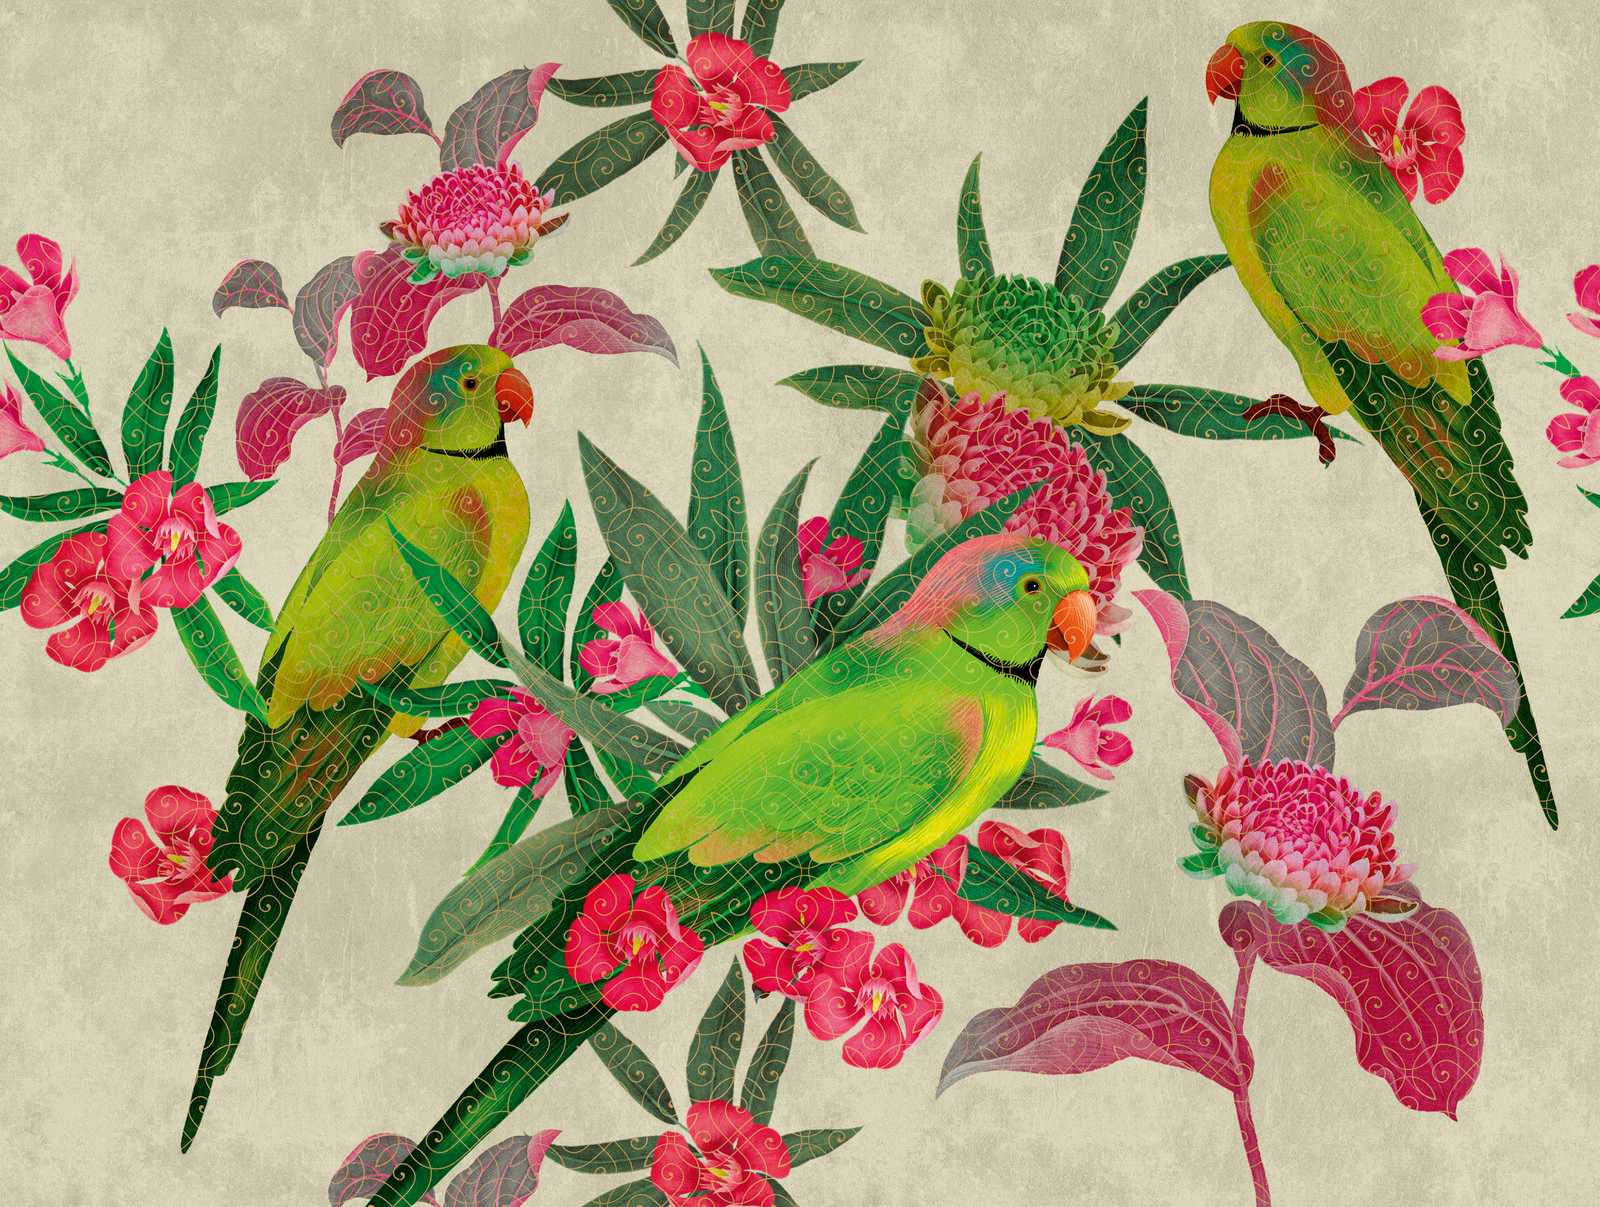             Wallpaper novelty | parrots motif wallpaper with flowers in art style
        